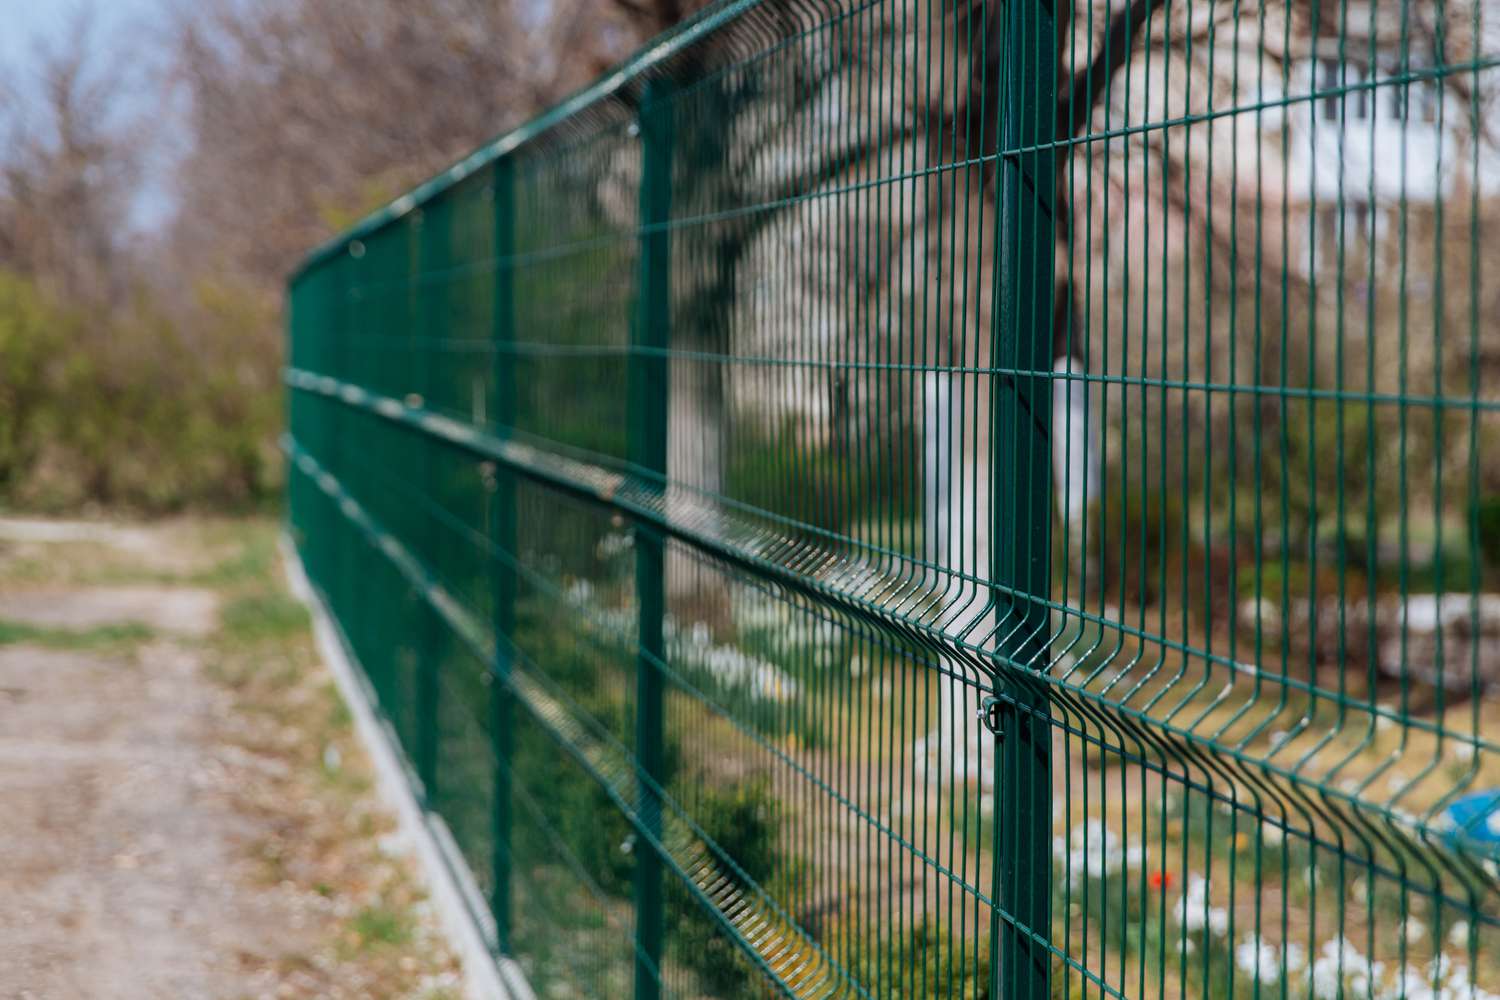 Medium-Range Security Fence